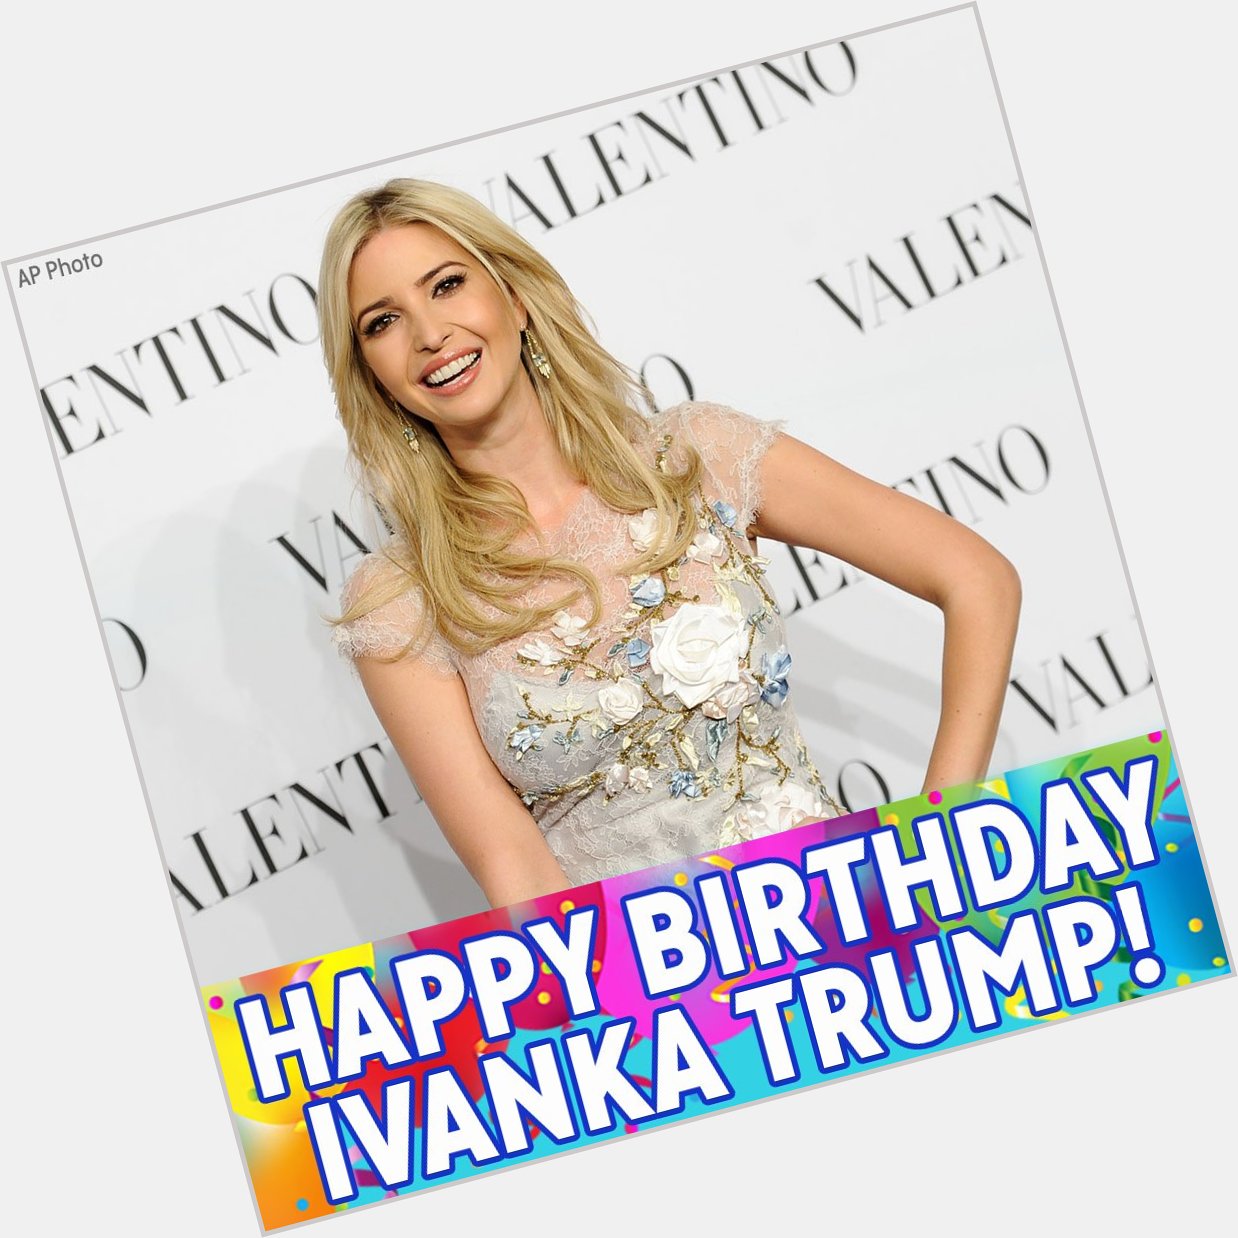 Happy Birthday to Ivanka Trump! 